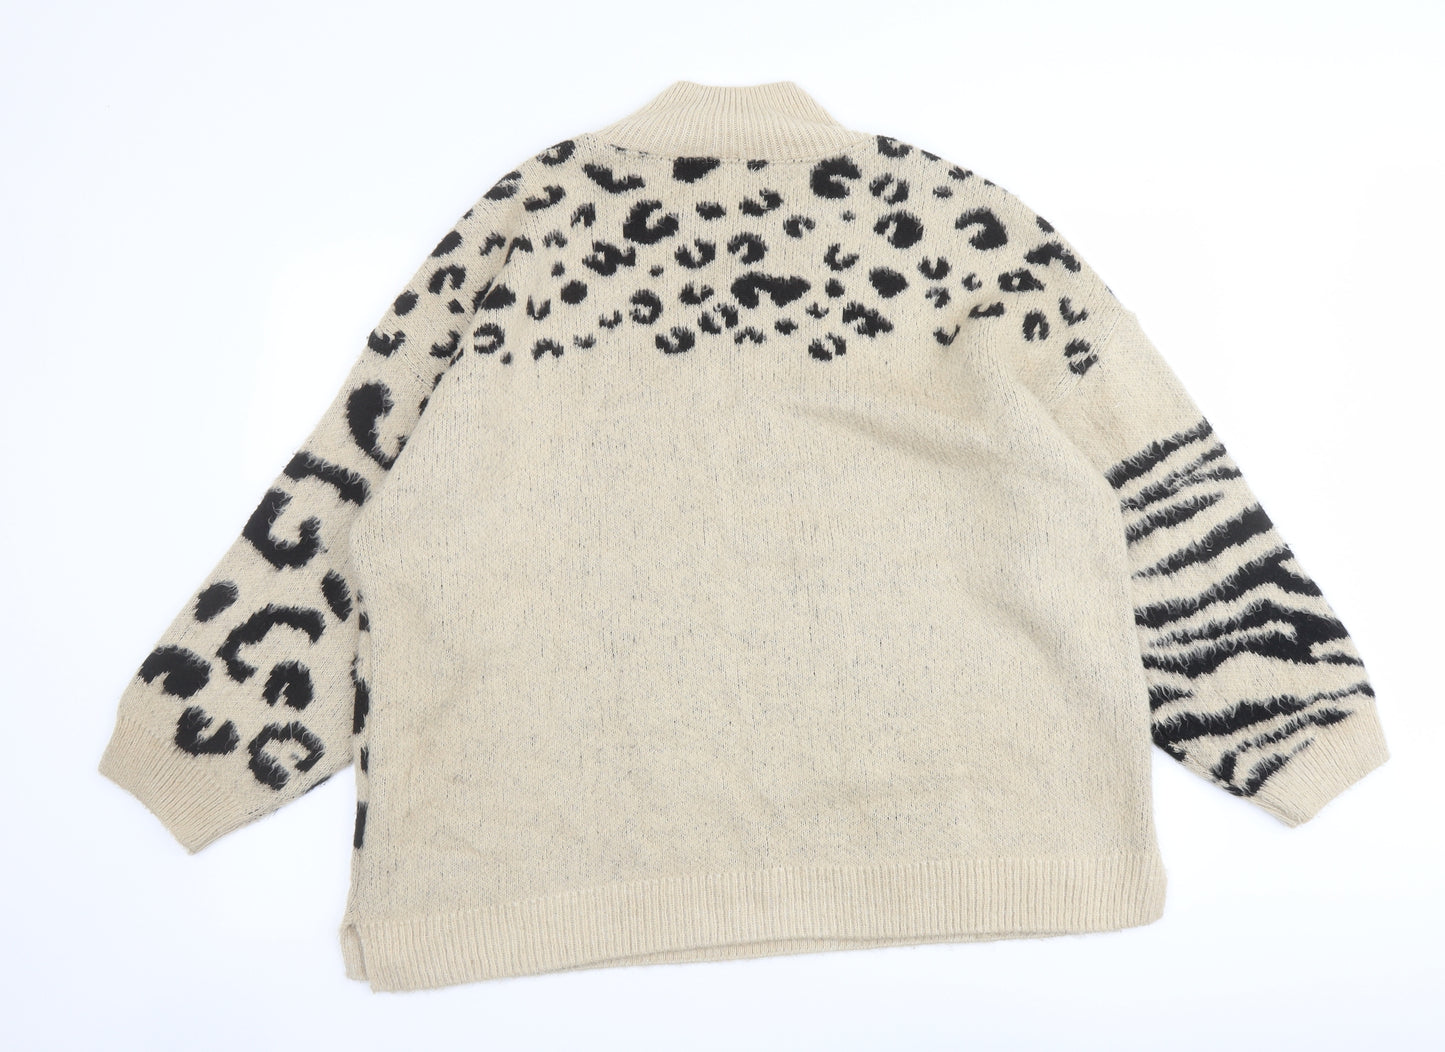 Topshop Womens Beige Mock Neck Animal Print Acrylic Pullover Jumper Size M - Leopard Tiger Pattern